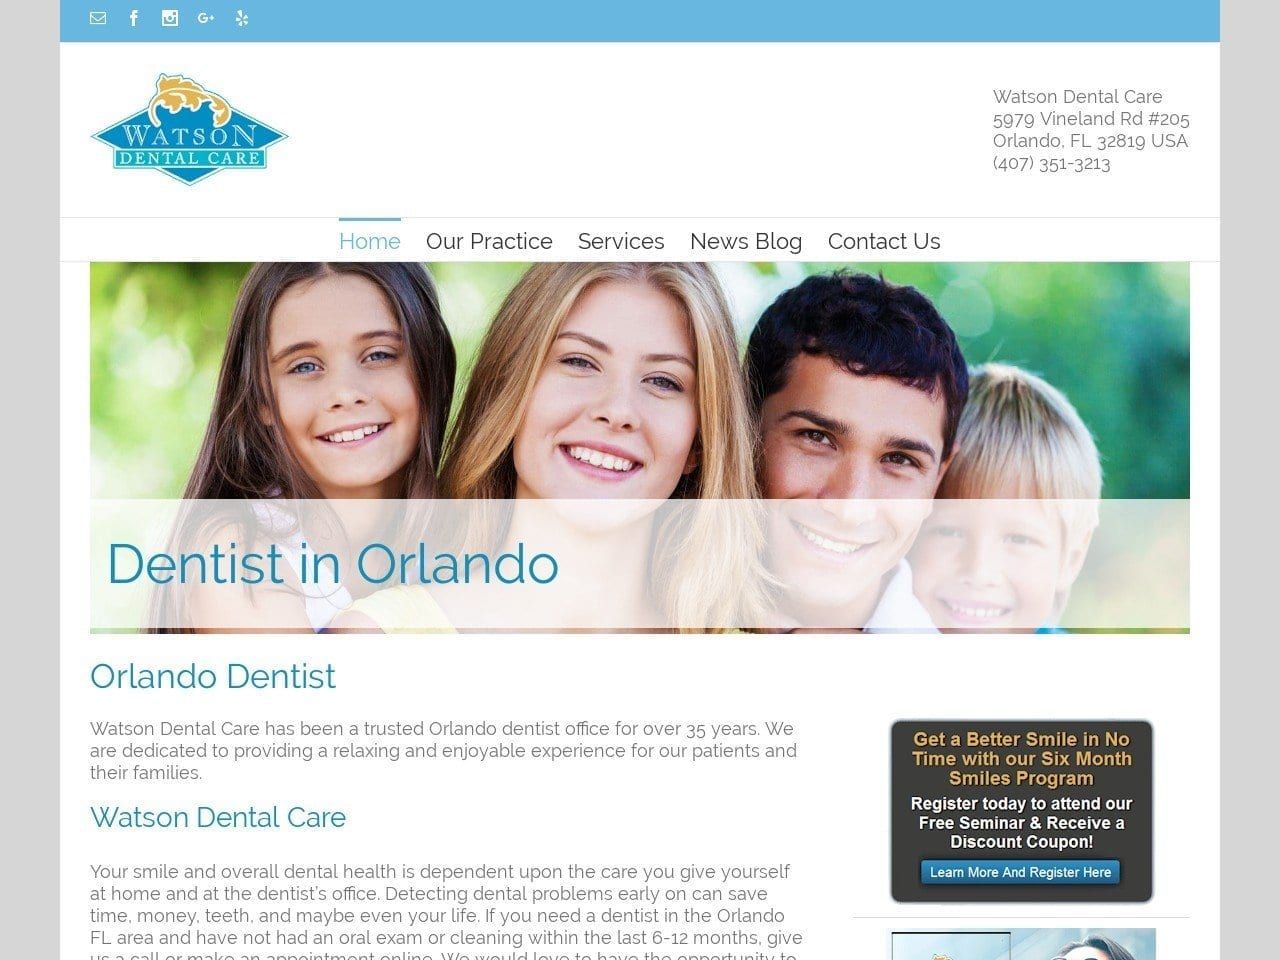 Watson Dental Care Website Screenshot from dentistorlandoflorida.com